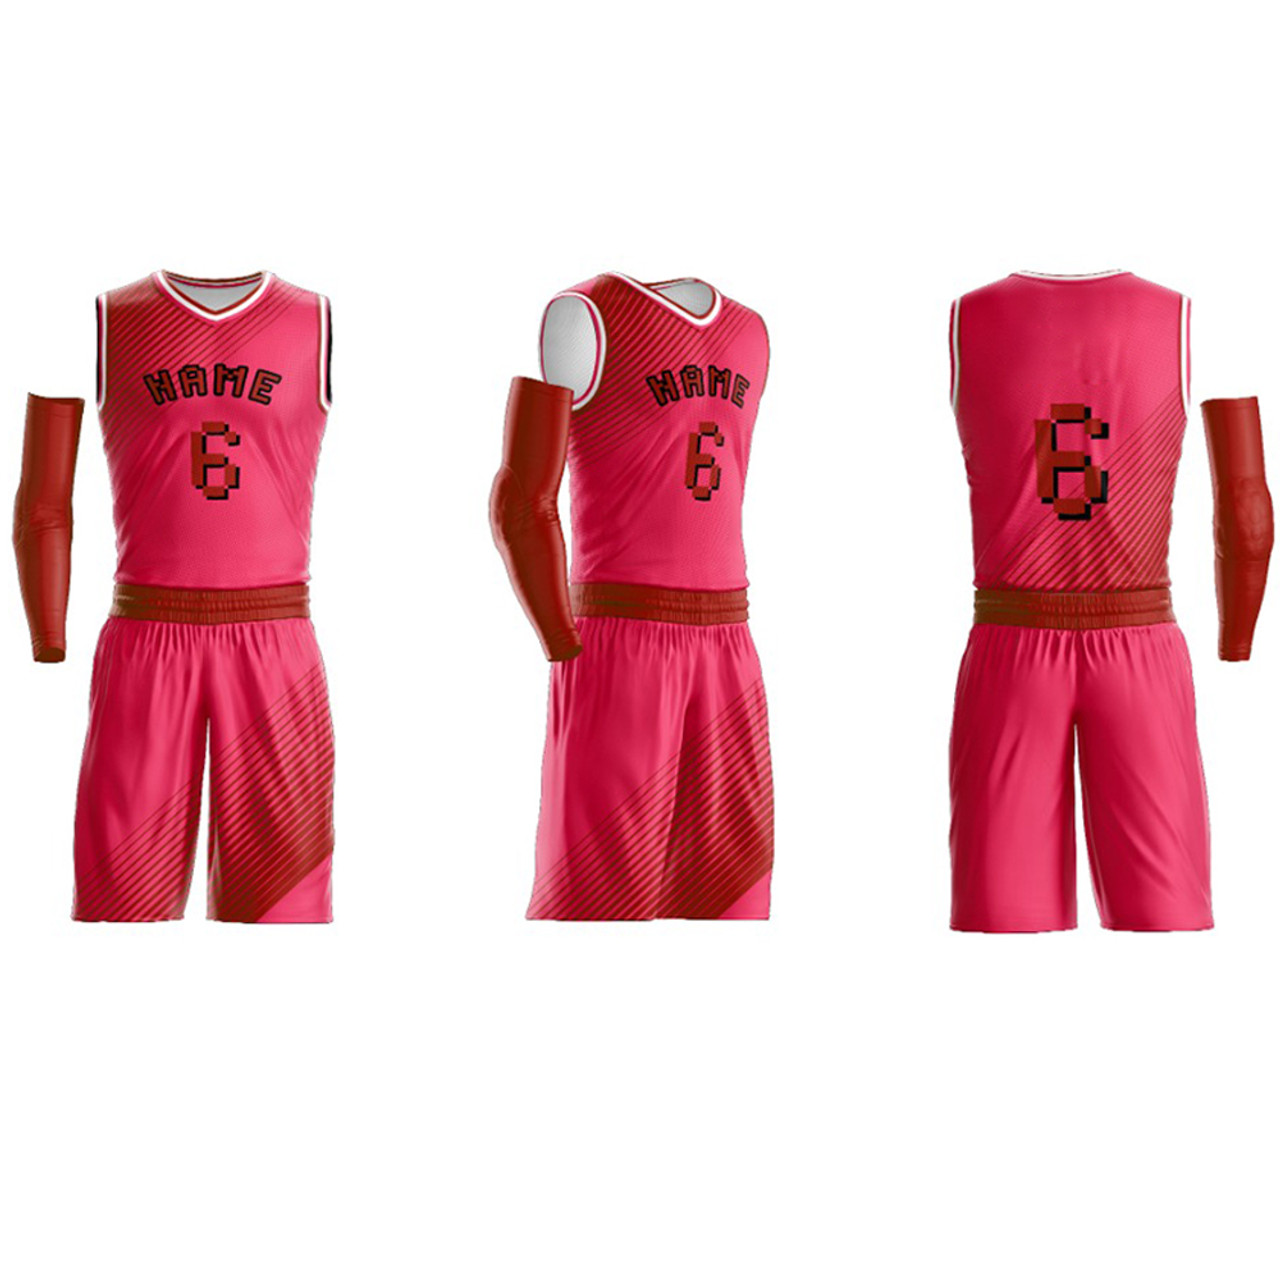 basketball jersey no print (plain Basketball jersey)